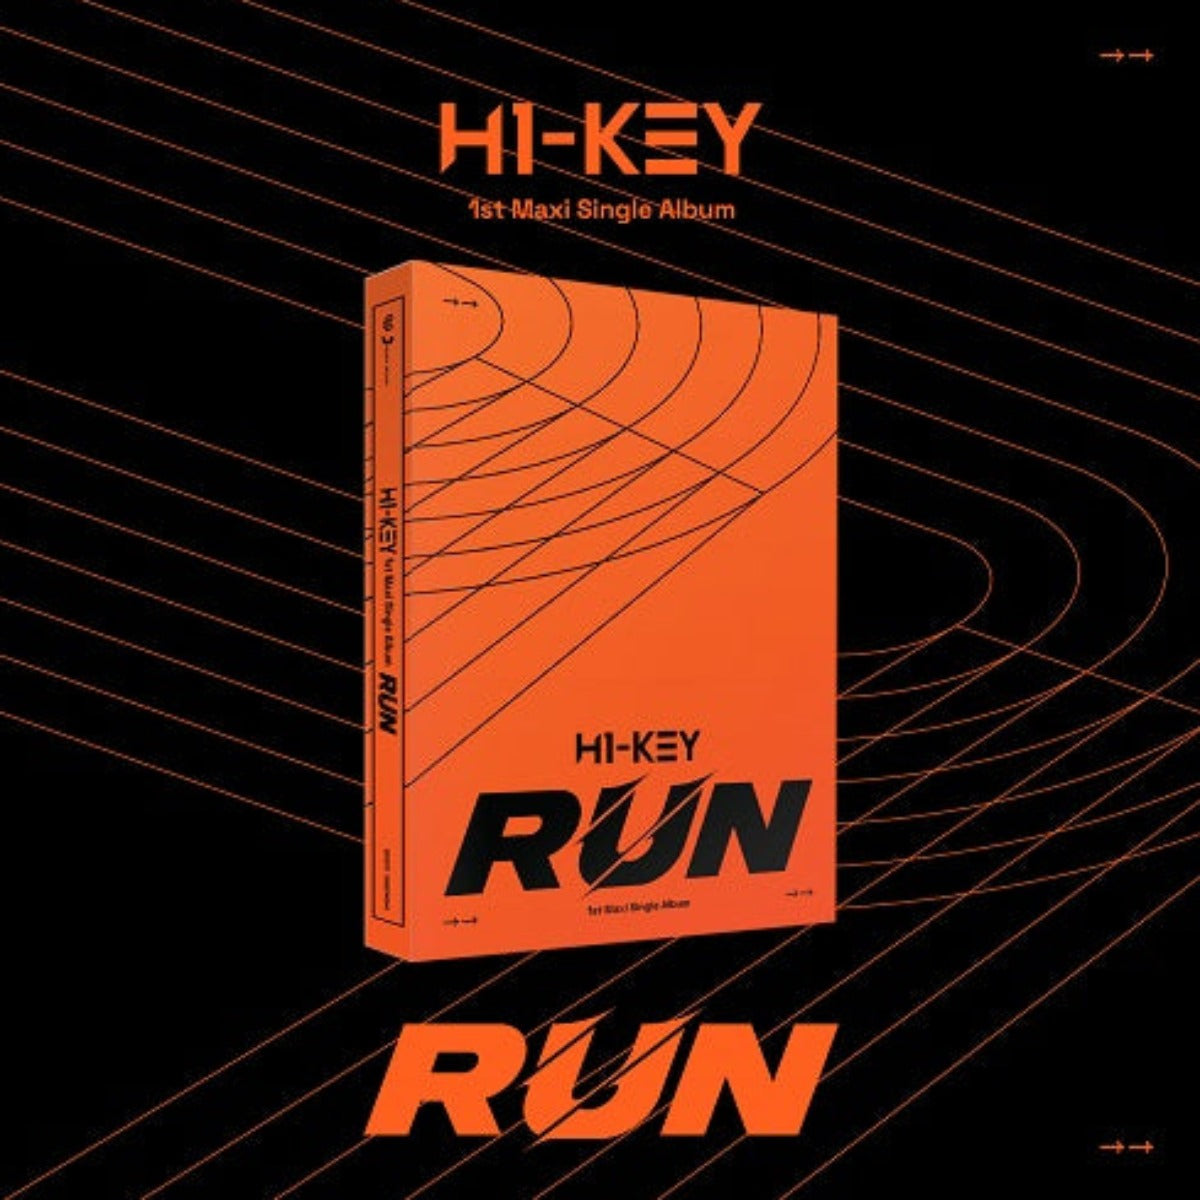 H1-KEY Maxi Single Album Vol. 1 - RUN